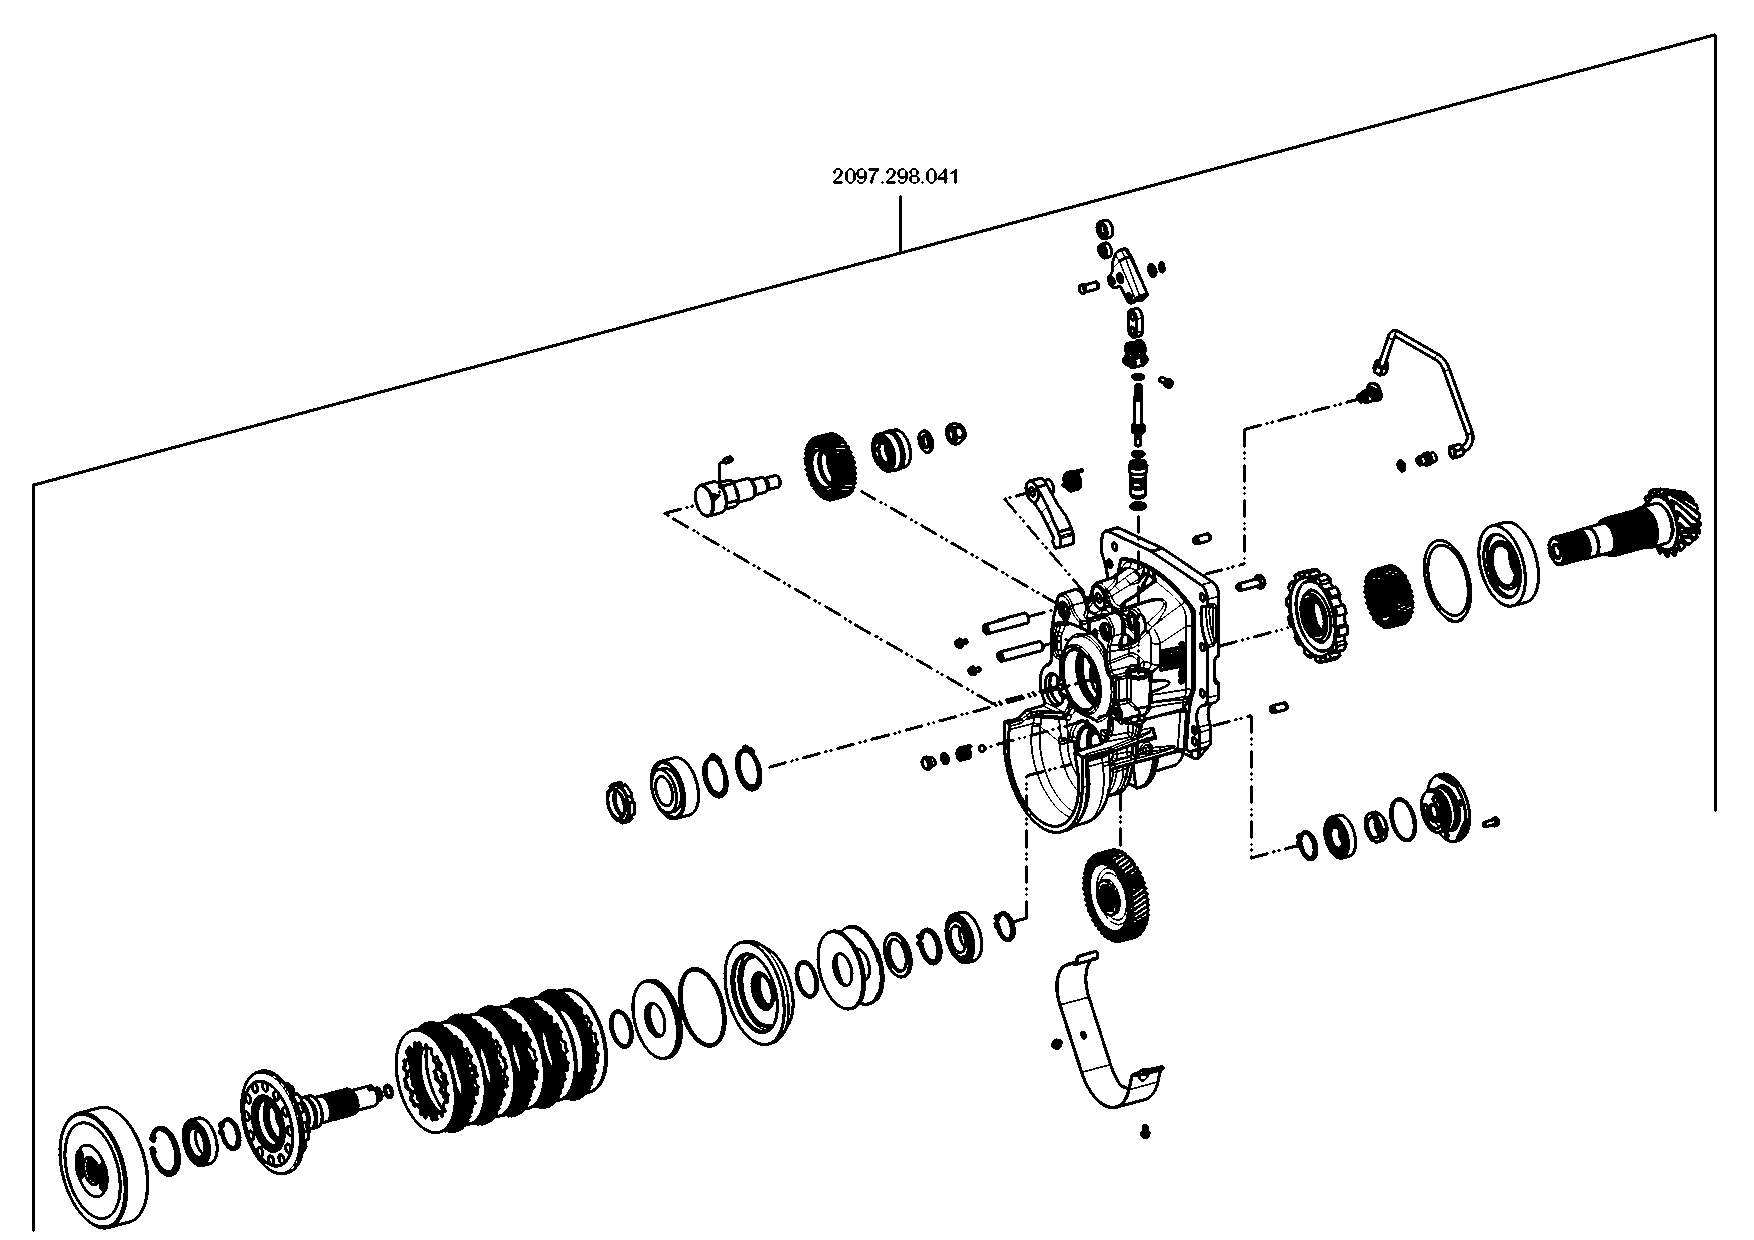 drawing for STE CONSTRUCT MEC. PANHARD LEVASSOR 0.900.1229.8 - LEG SPRING (figure 2)